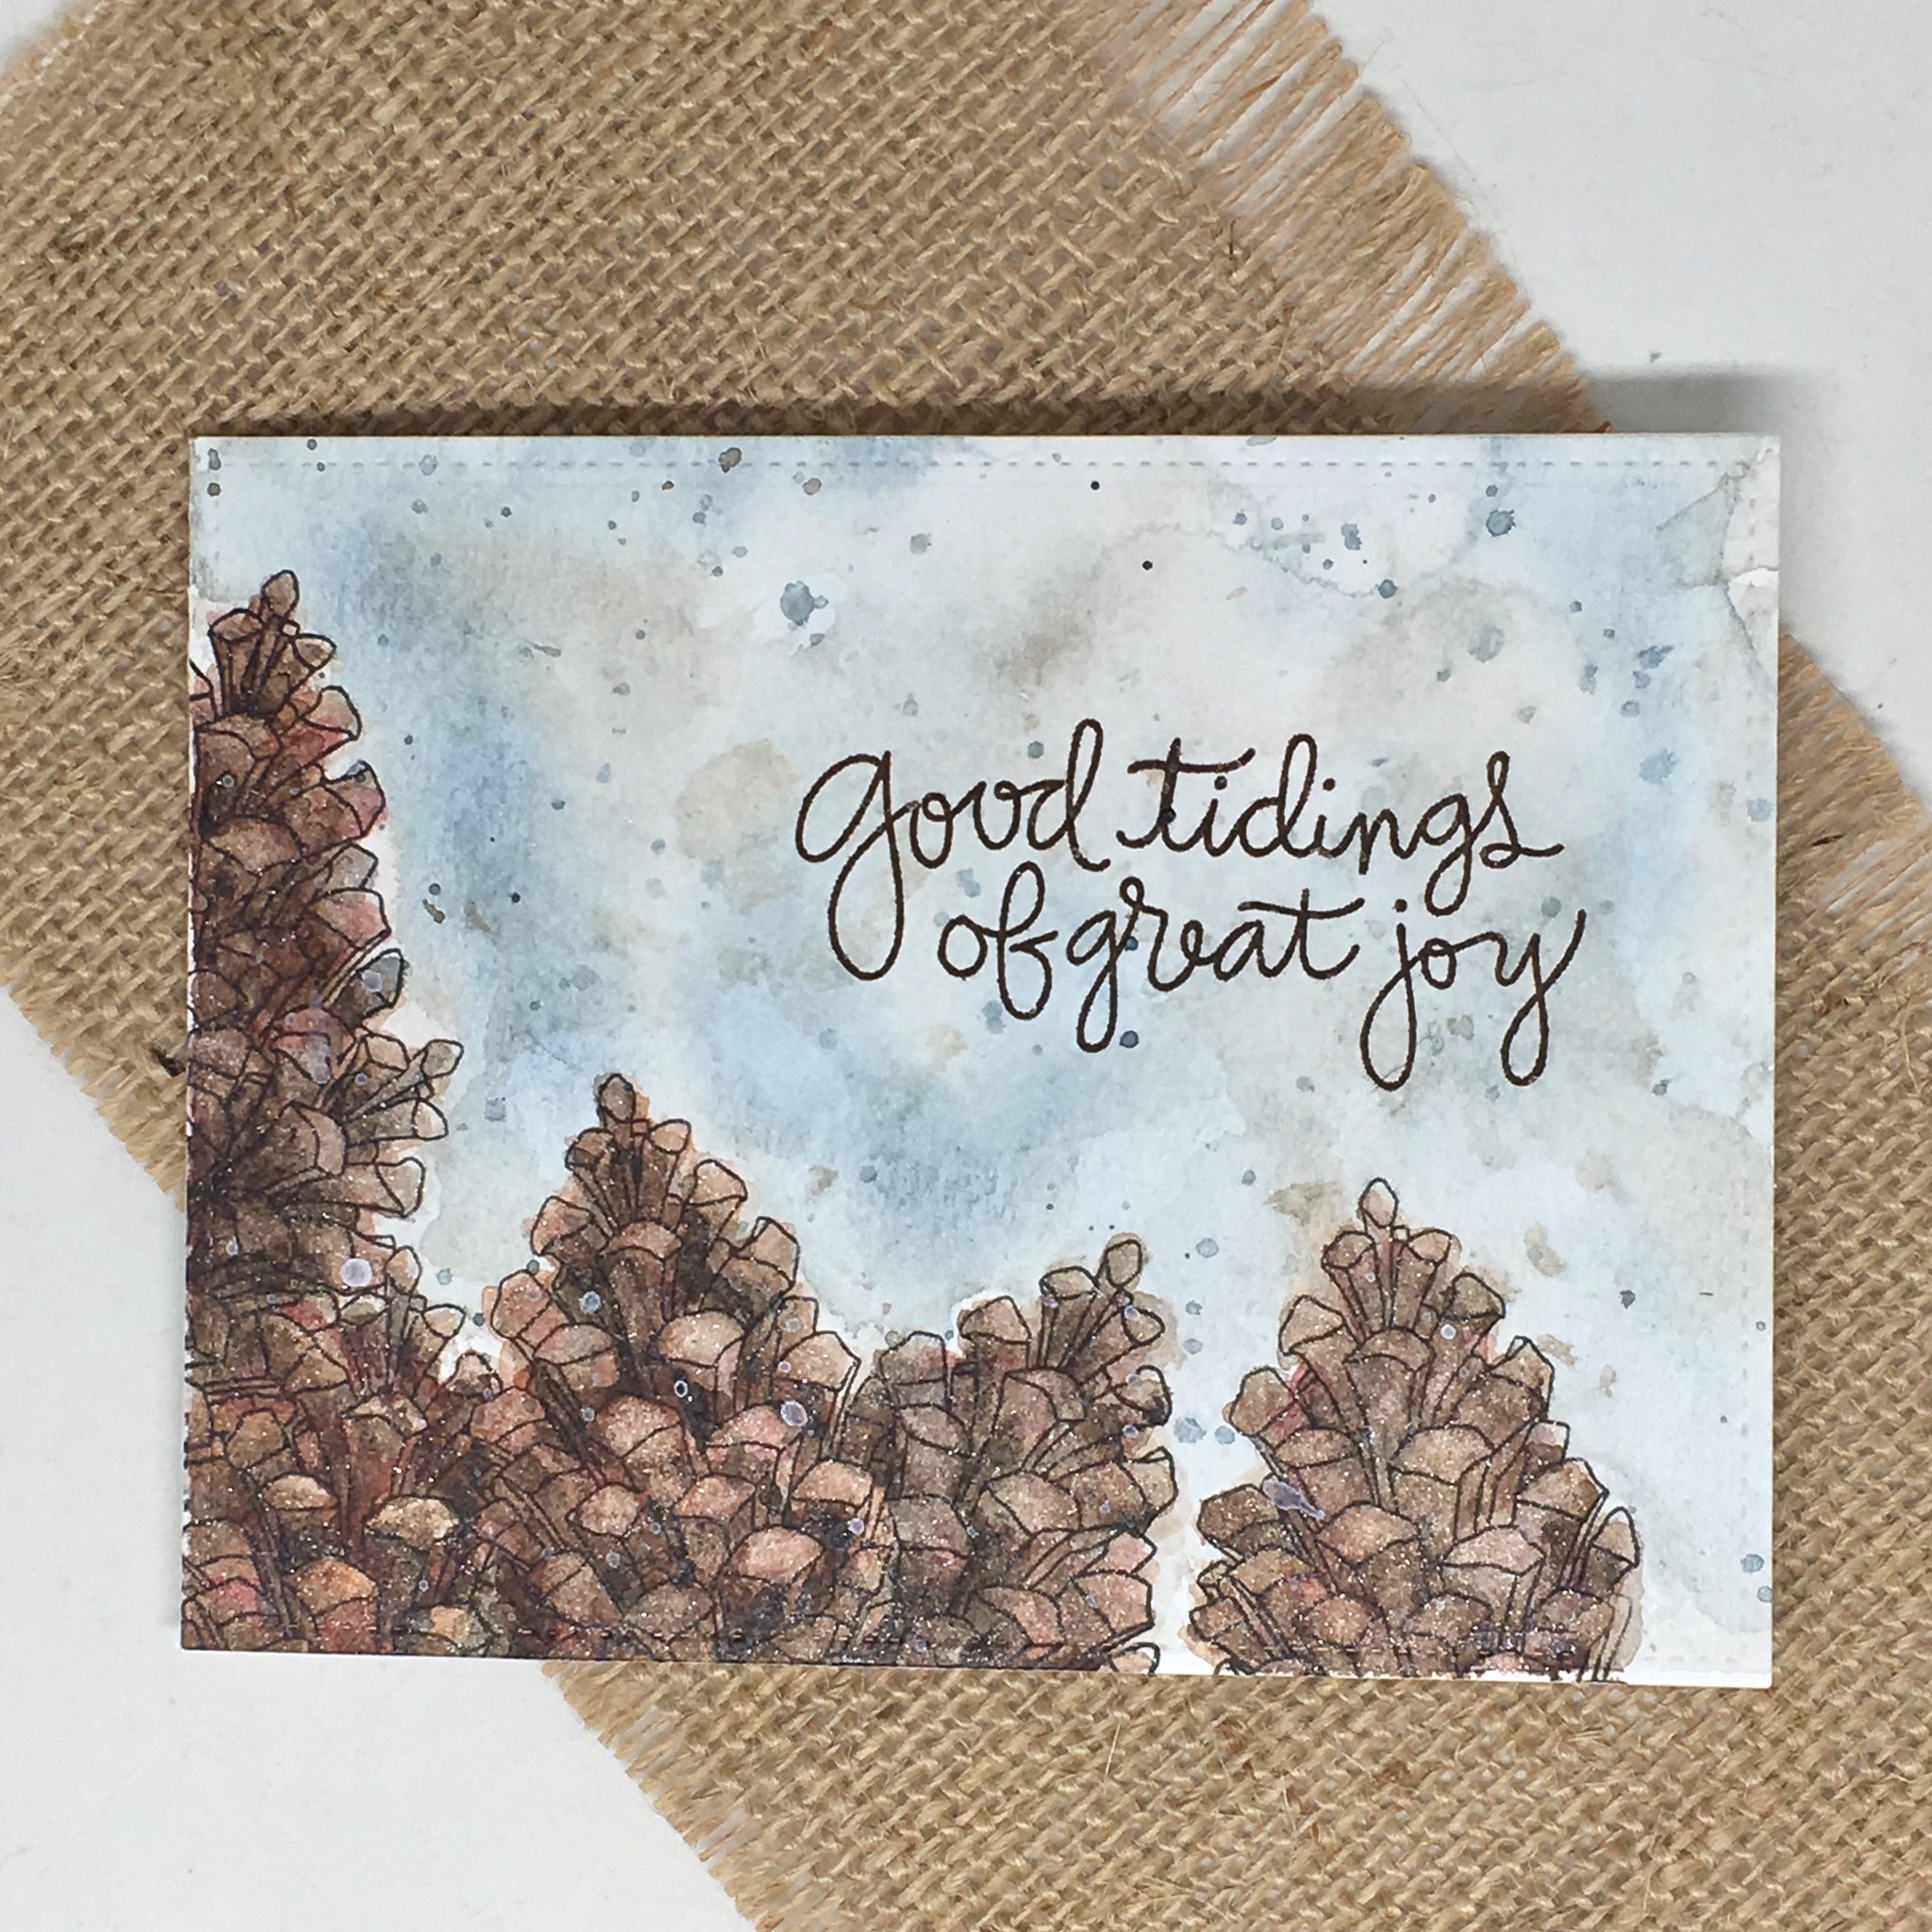 Good tidings of great joy - Christmas card